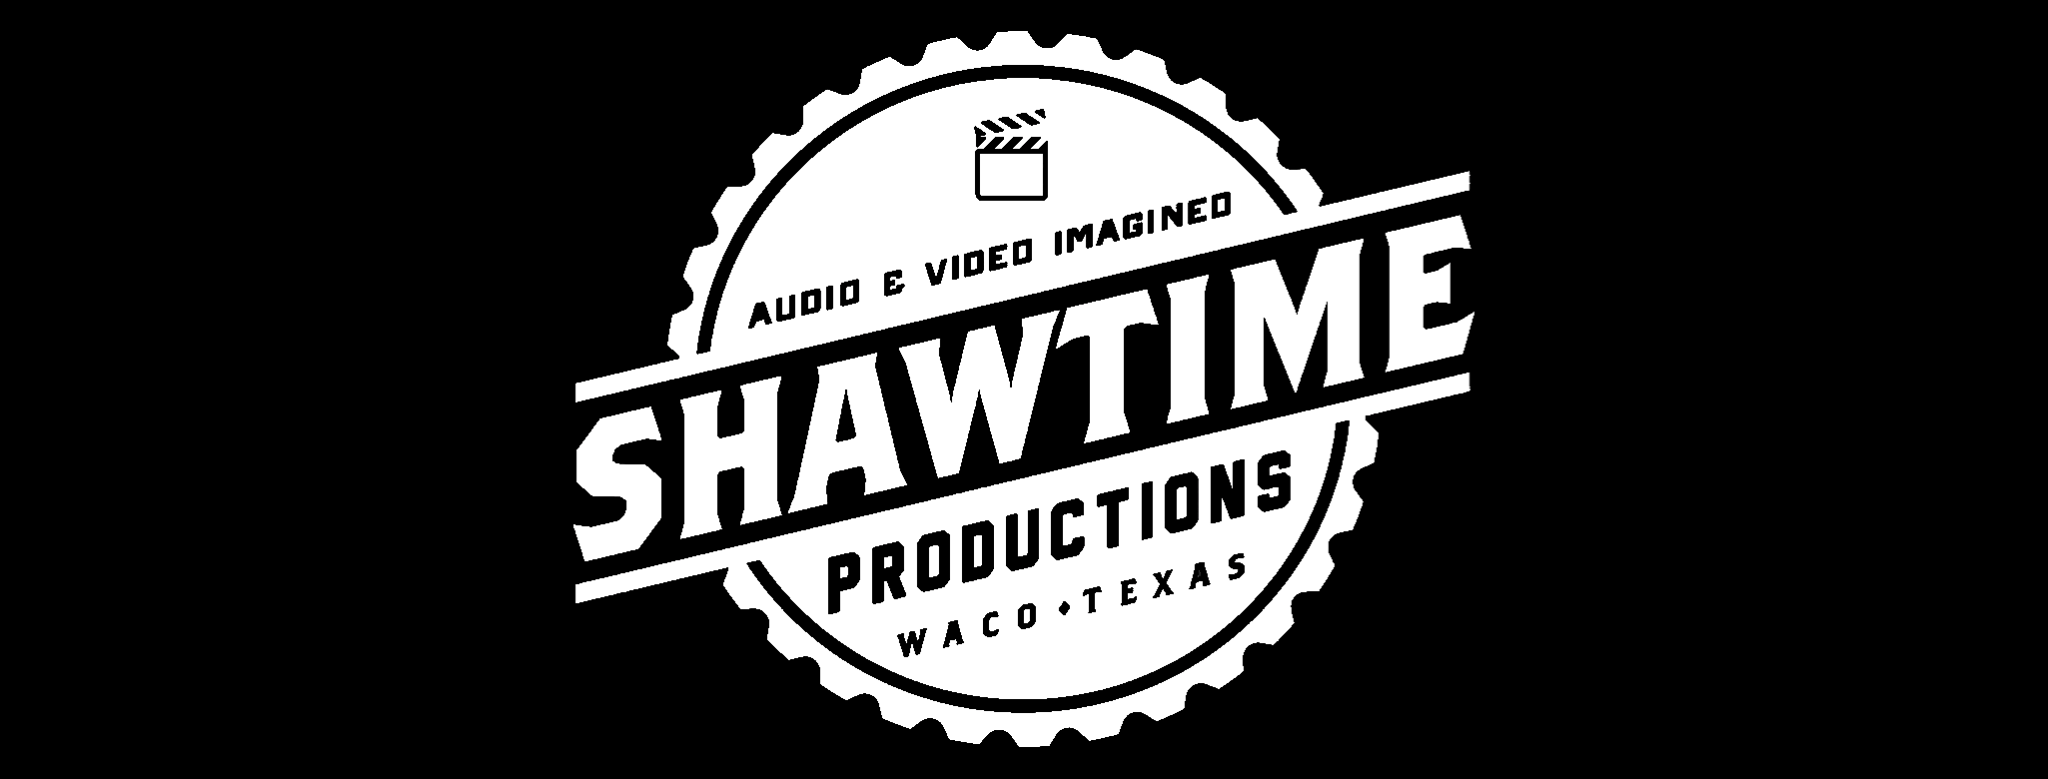 Shawtime Productions